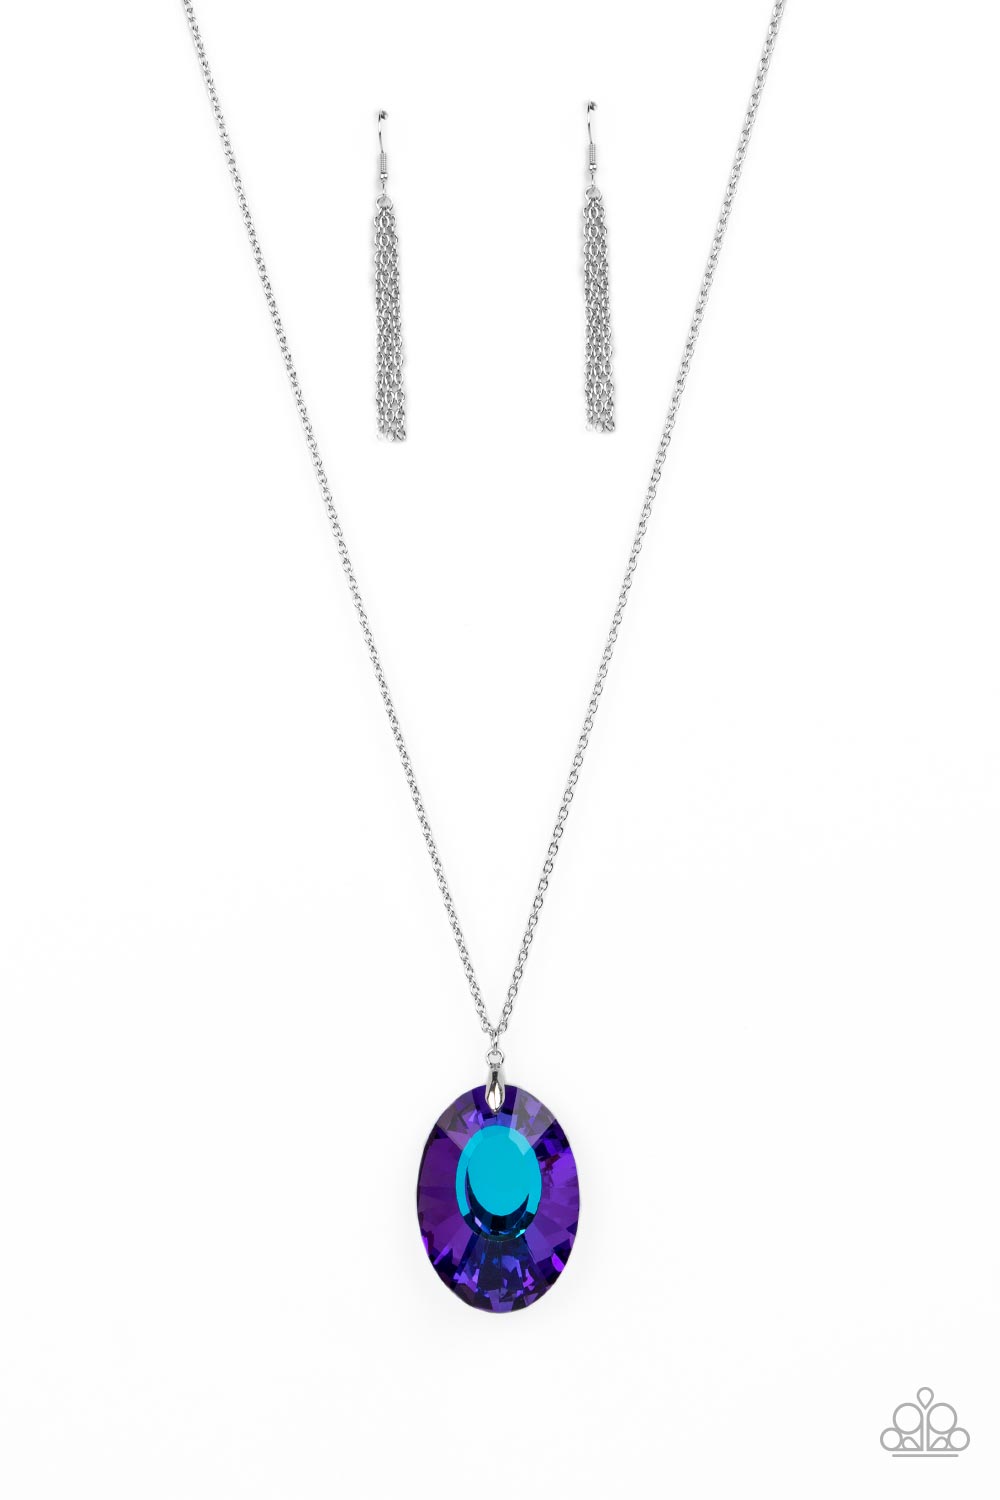 Celestial Essence - Blue Necklace Set - Princess Glam Shop